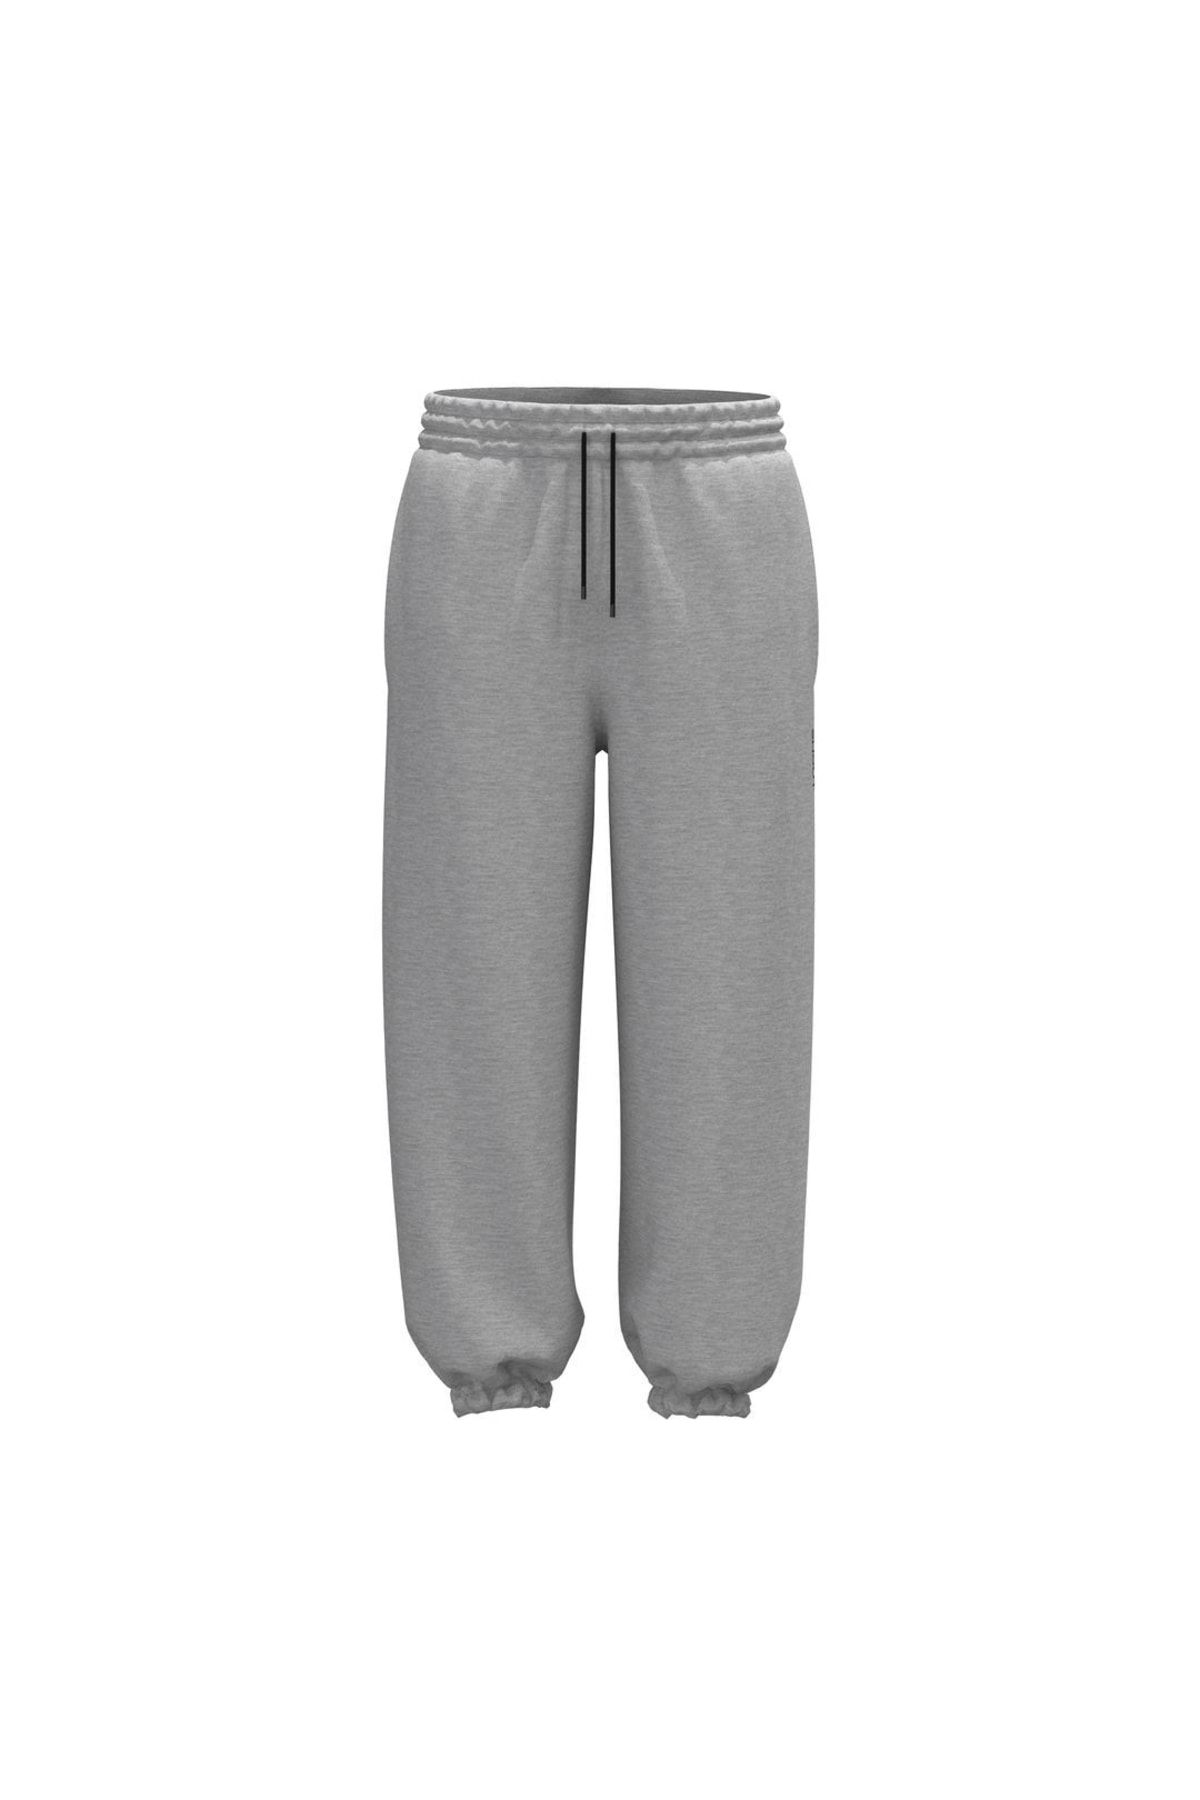 Shout Oversize Basic Gray Jogger Unisex Pantolon